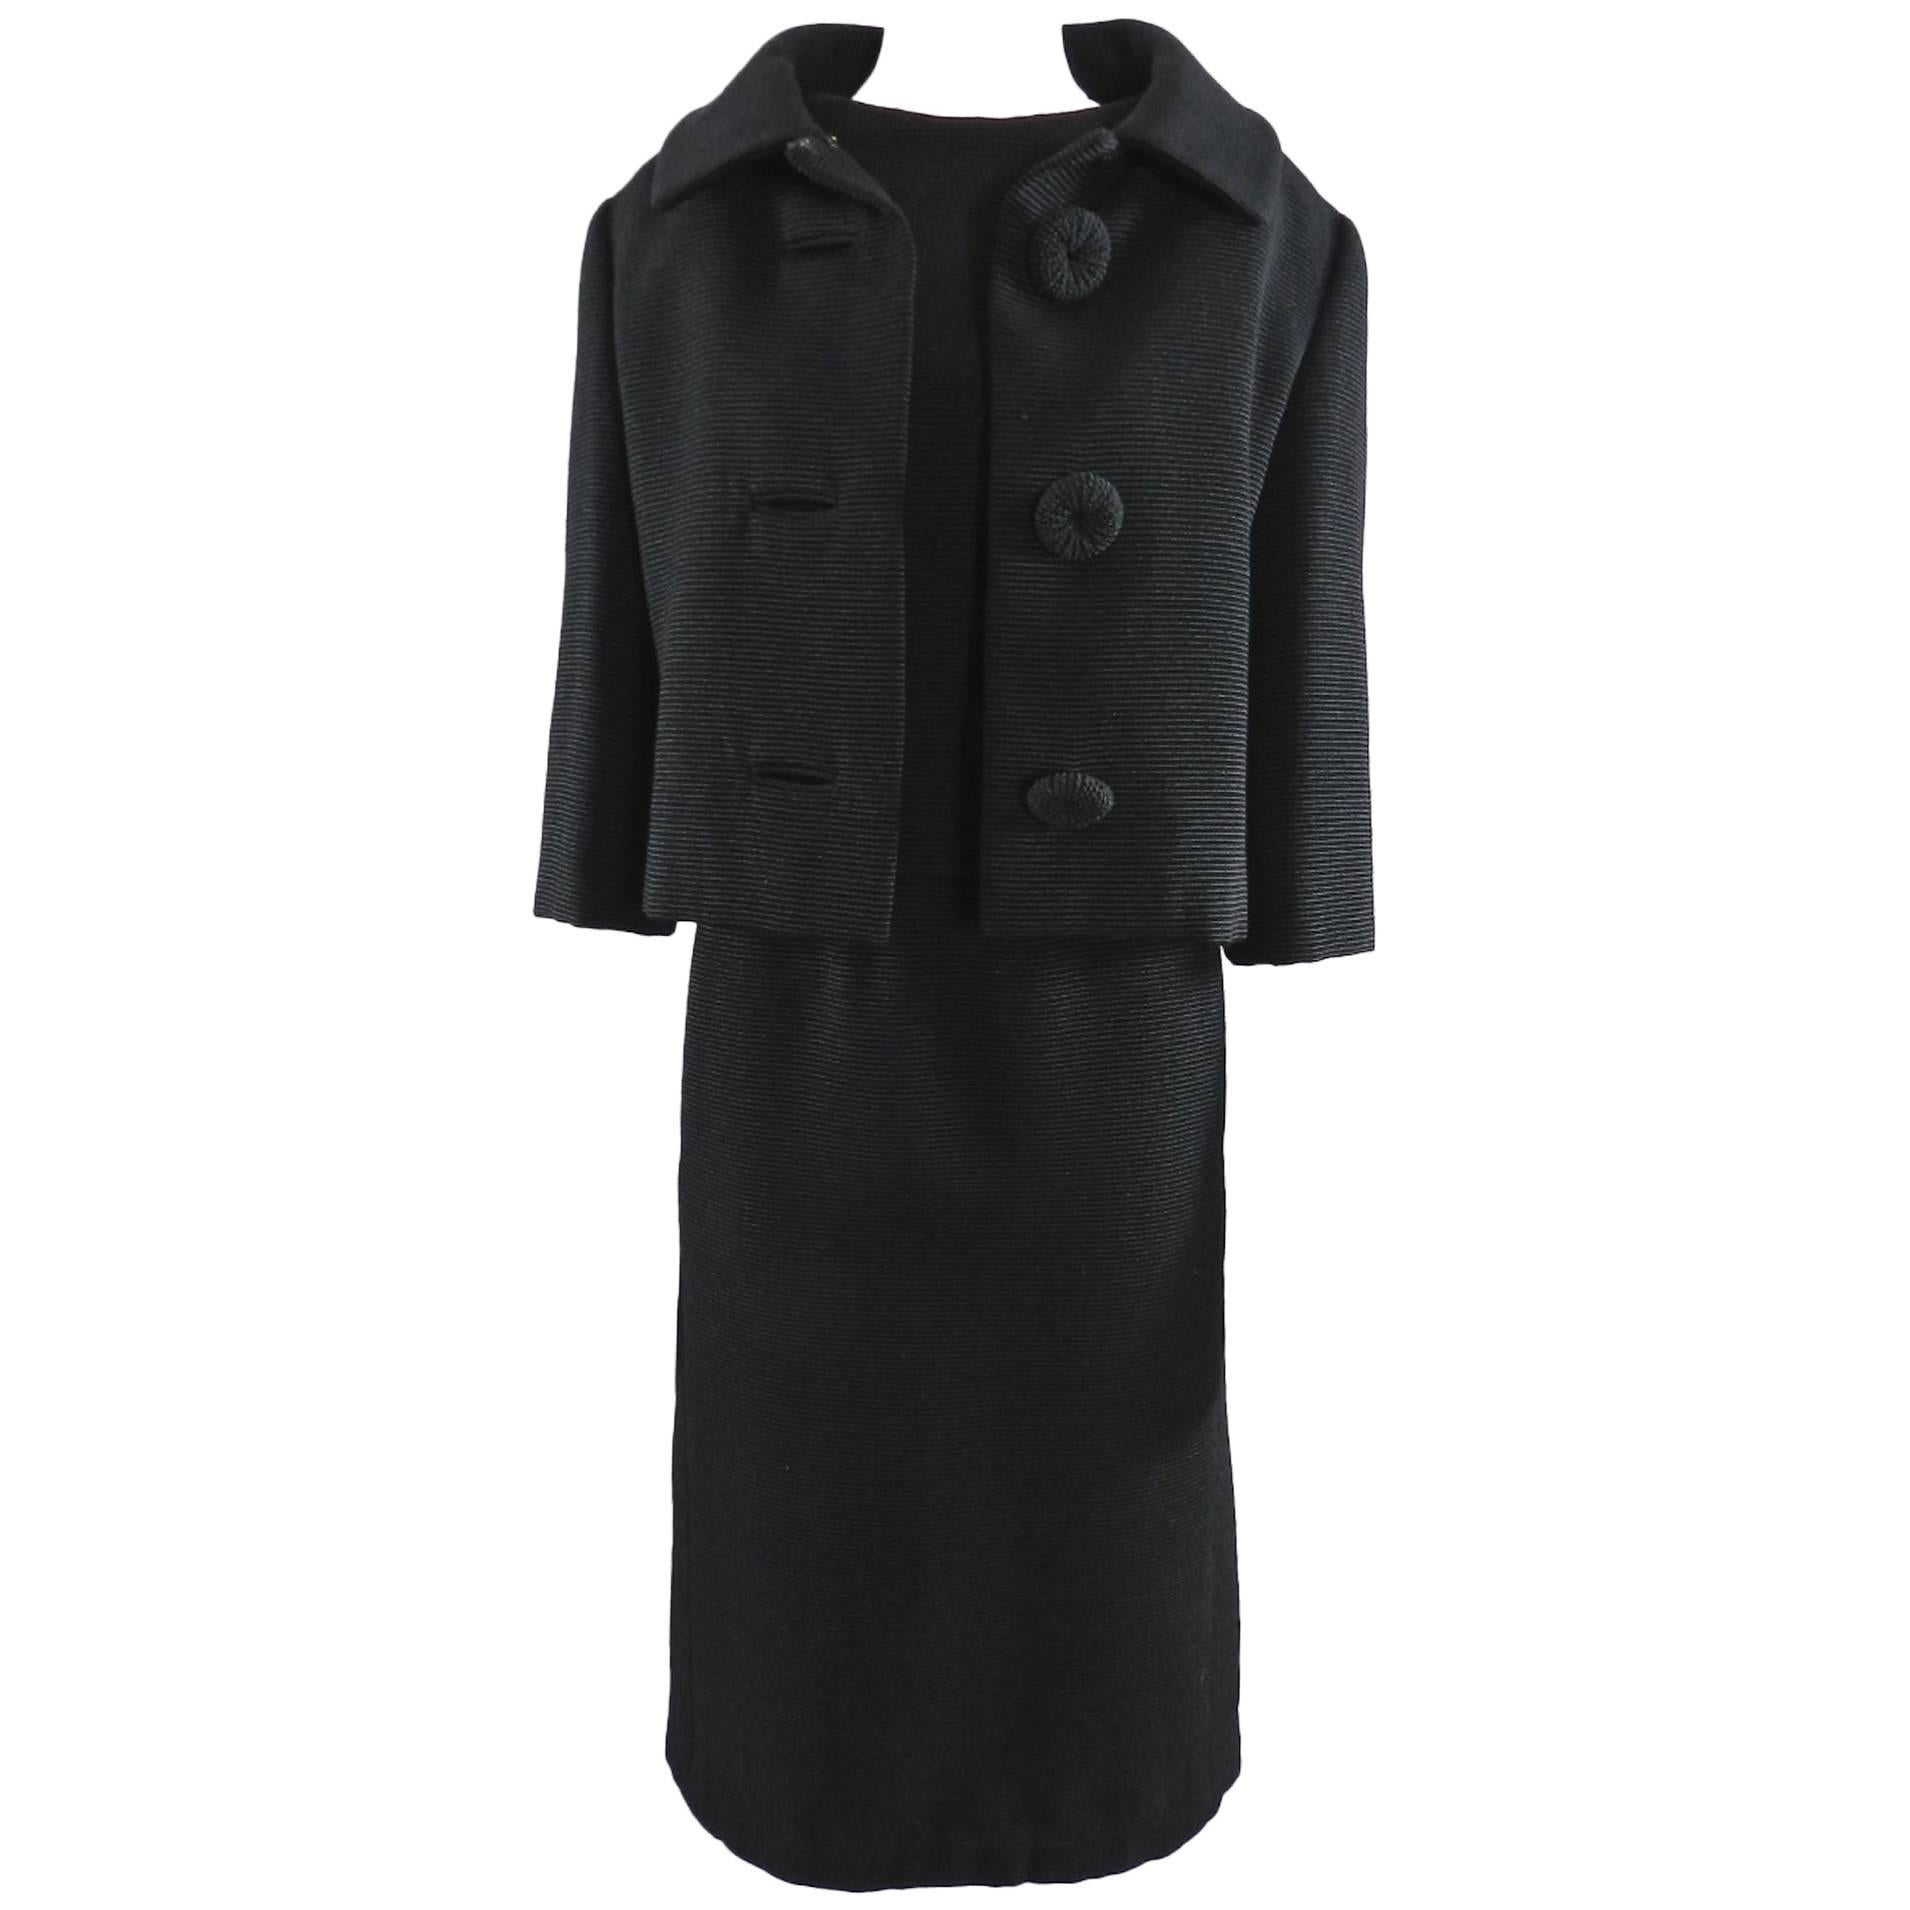 Christian Dior circa 1960 Black Dress and Jacket Suit